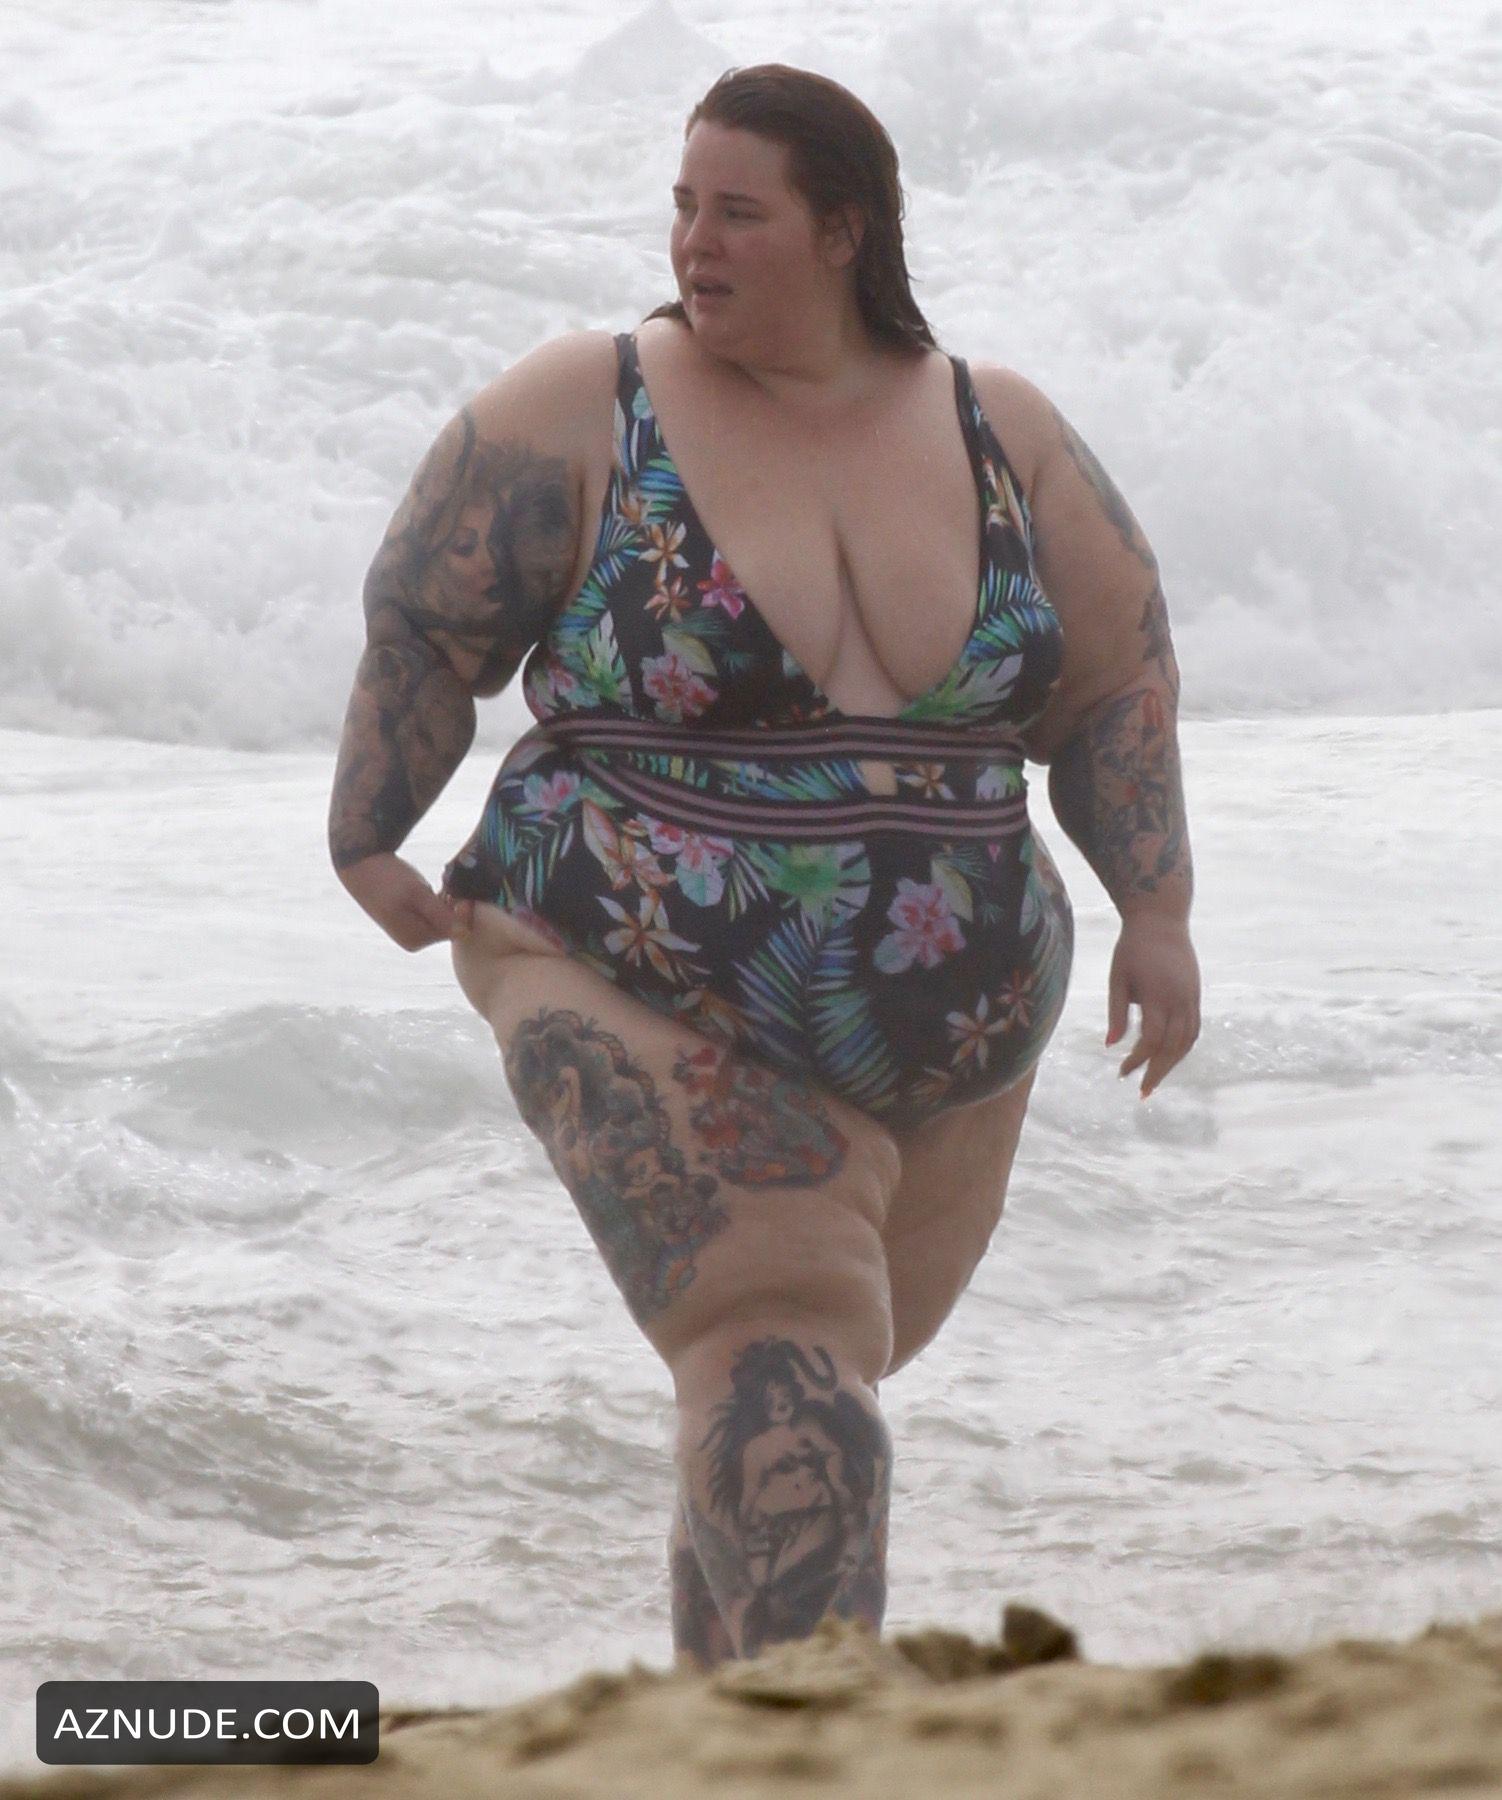 Tess Holliday Spends The Day At Malibu Beach In A One Piece Bikini Aznude